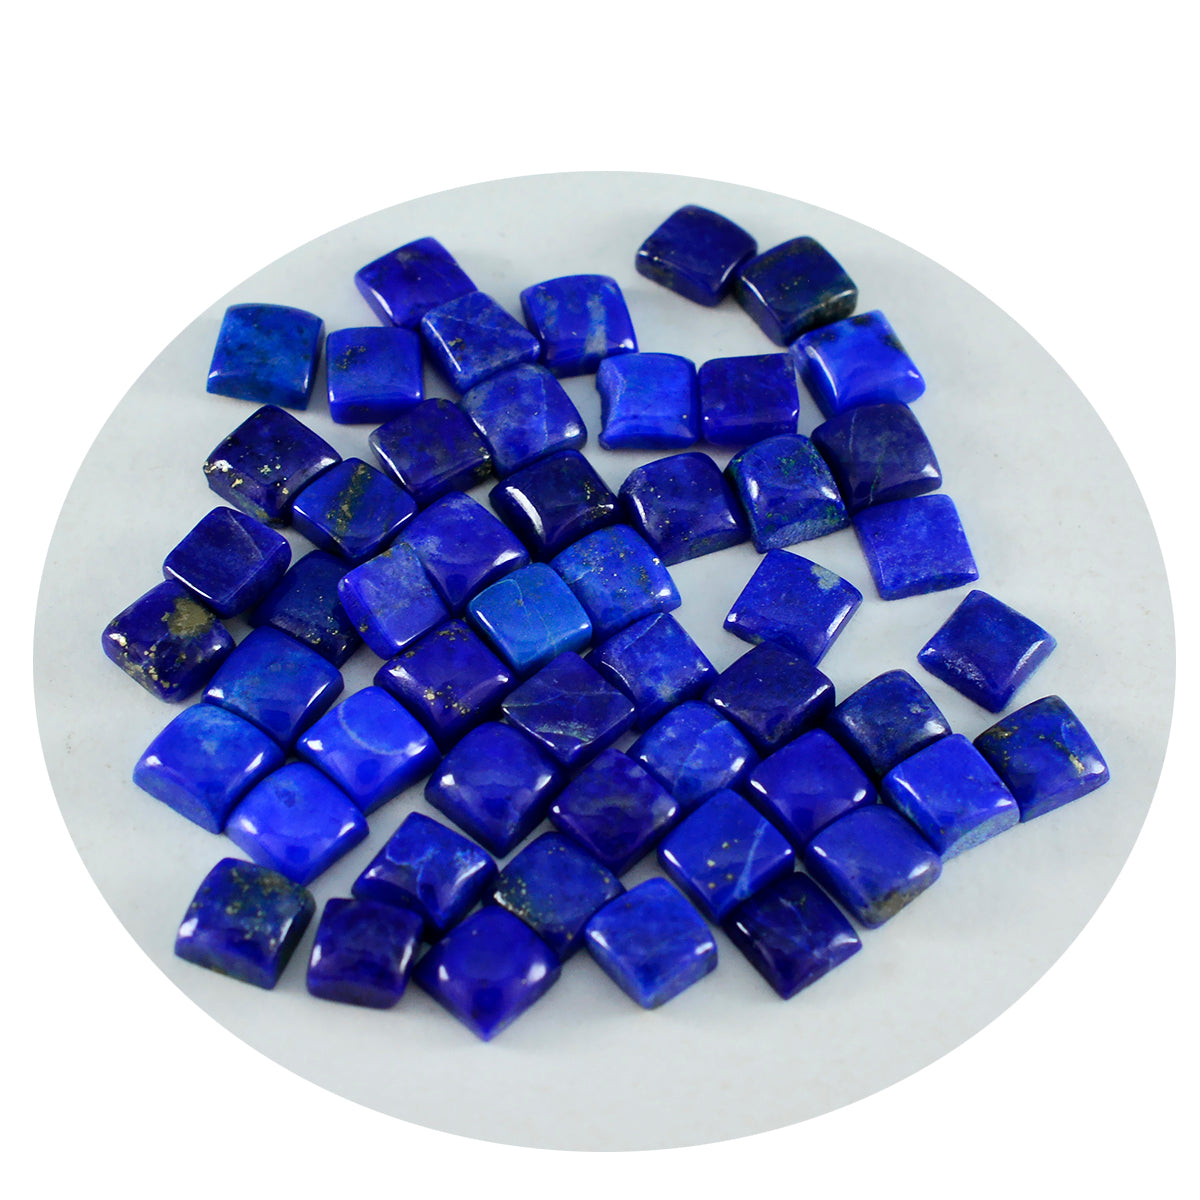 Riyogems 1PC Blue Lapis Lazuli Cabochon 5x5 mm Square Shape superb Quality Gem